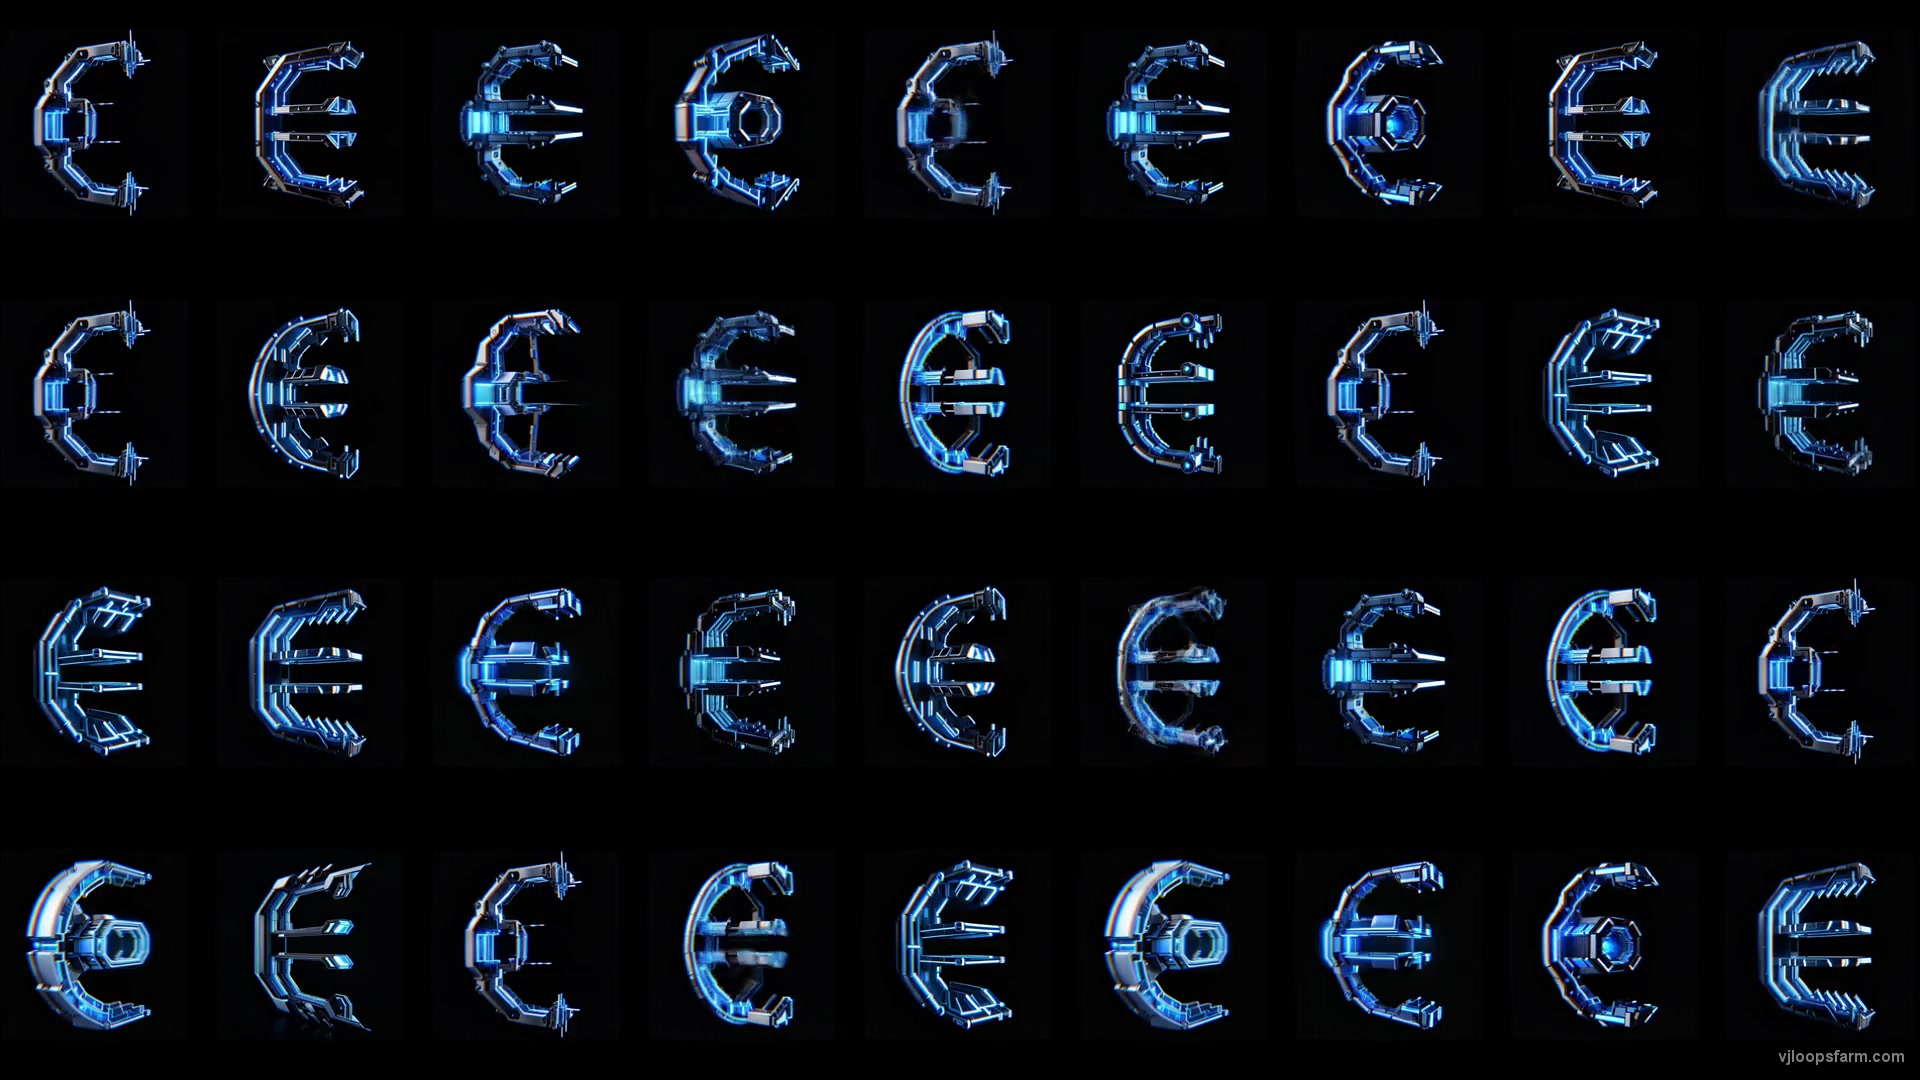 Cyberpunk EUR Currency Sign Pattern Random Motion Background